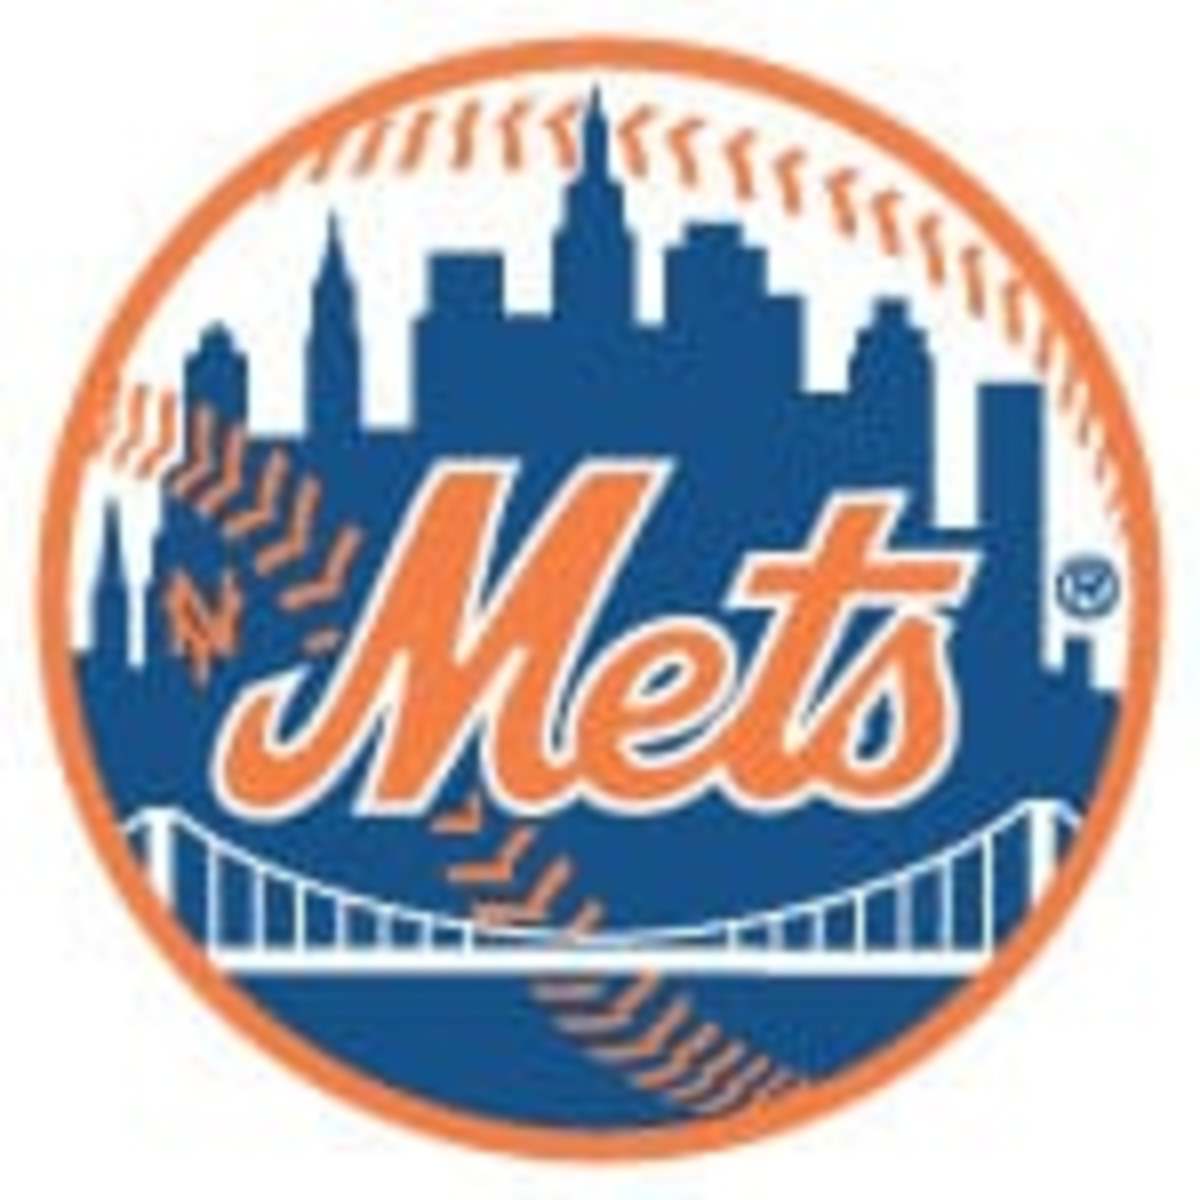 New York Mets logo